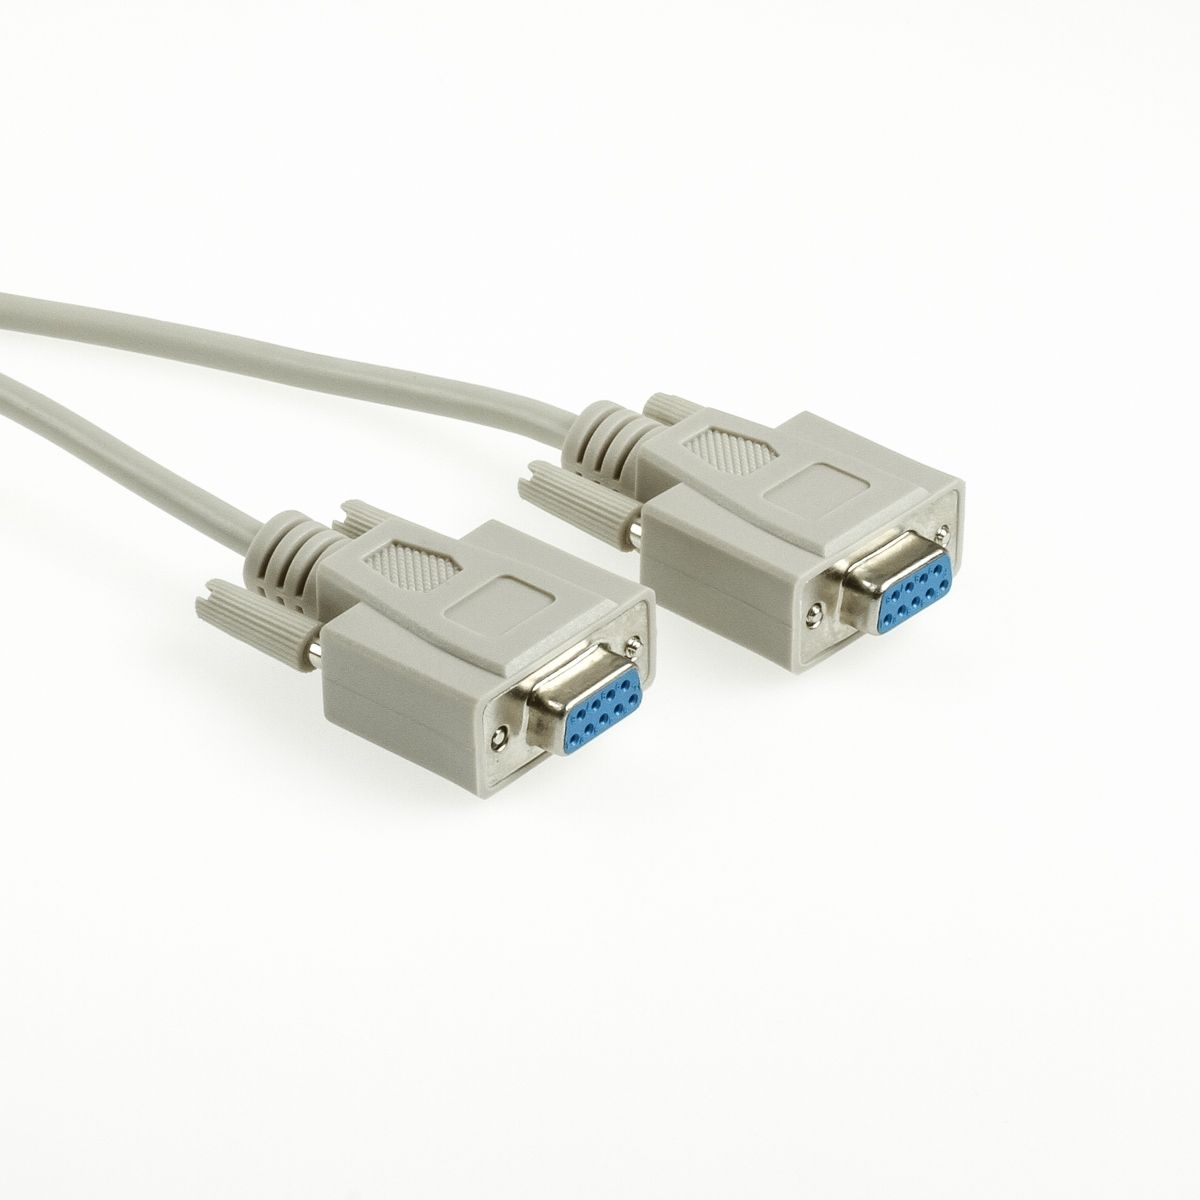 Serial cable DB9 female to DB9 female 2m